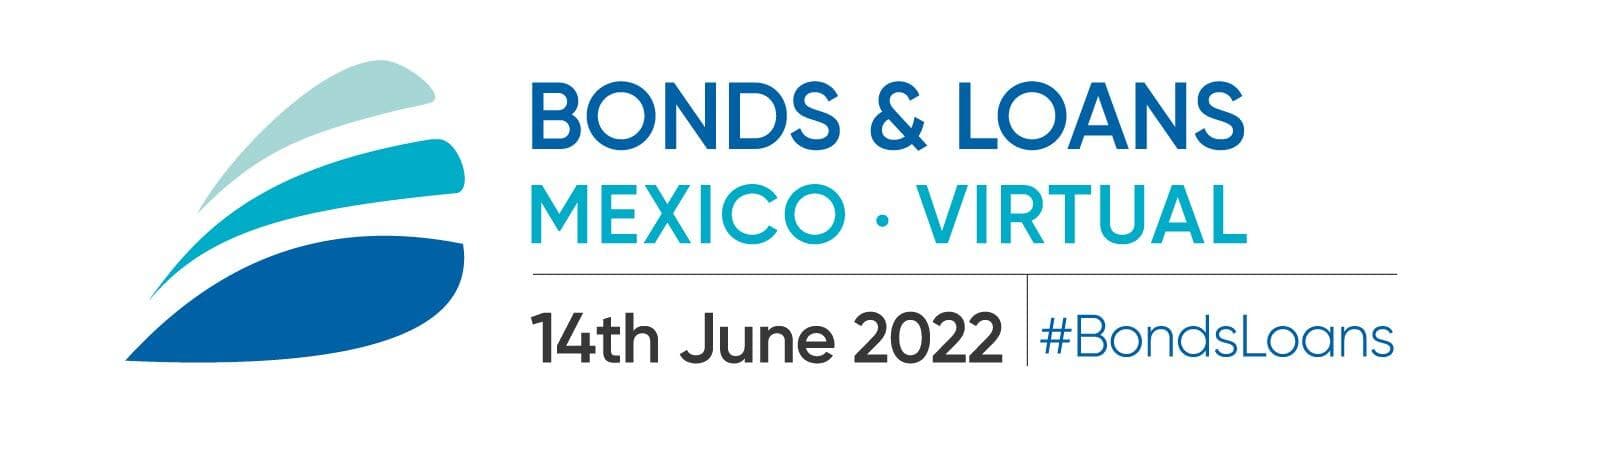 Bonds & Loans Mexico 2022 Virtual